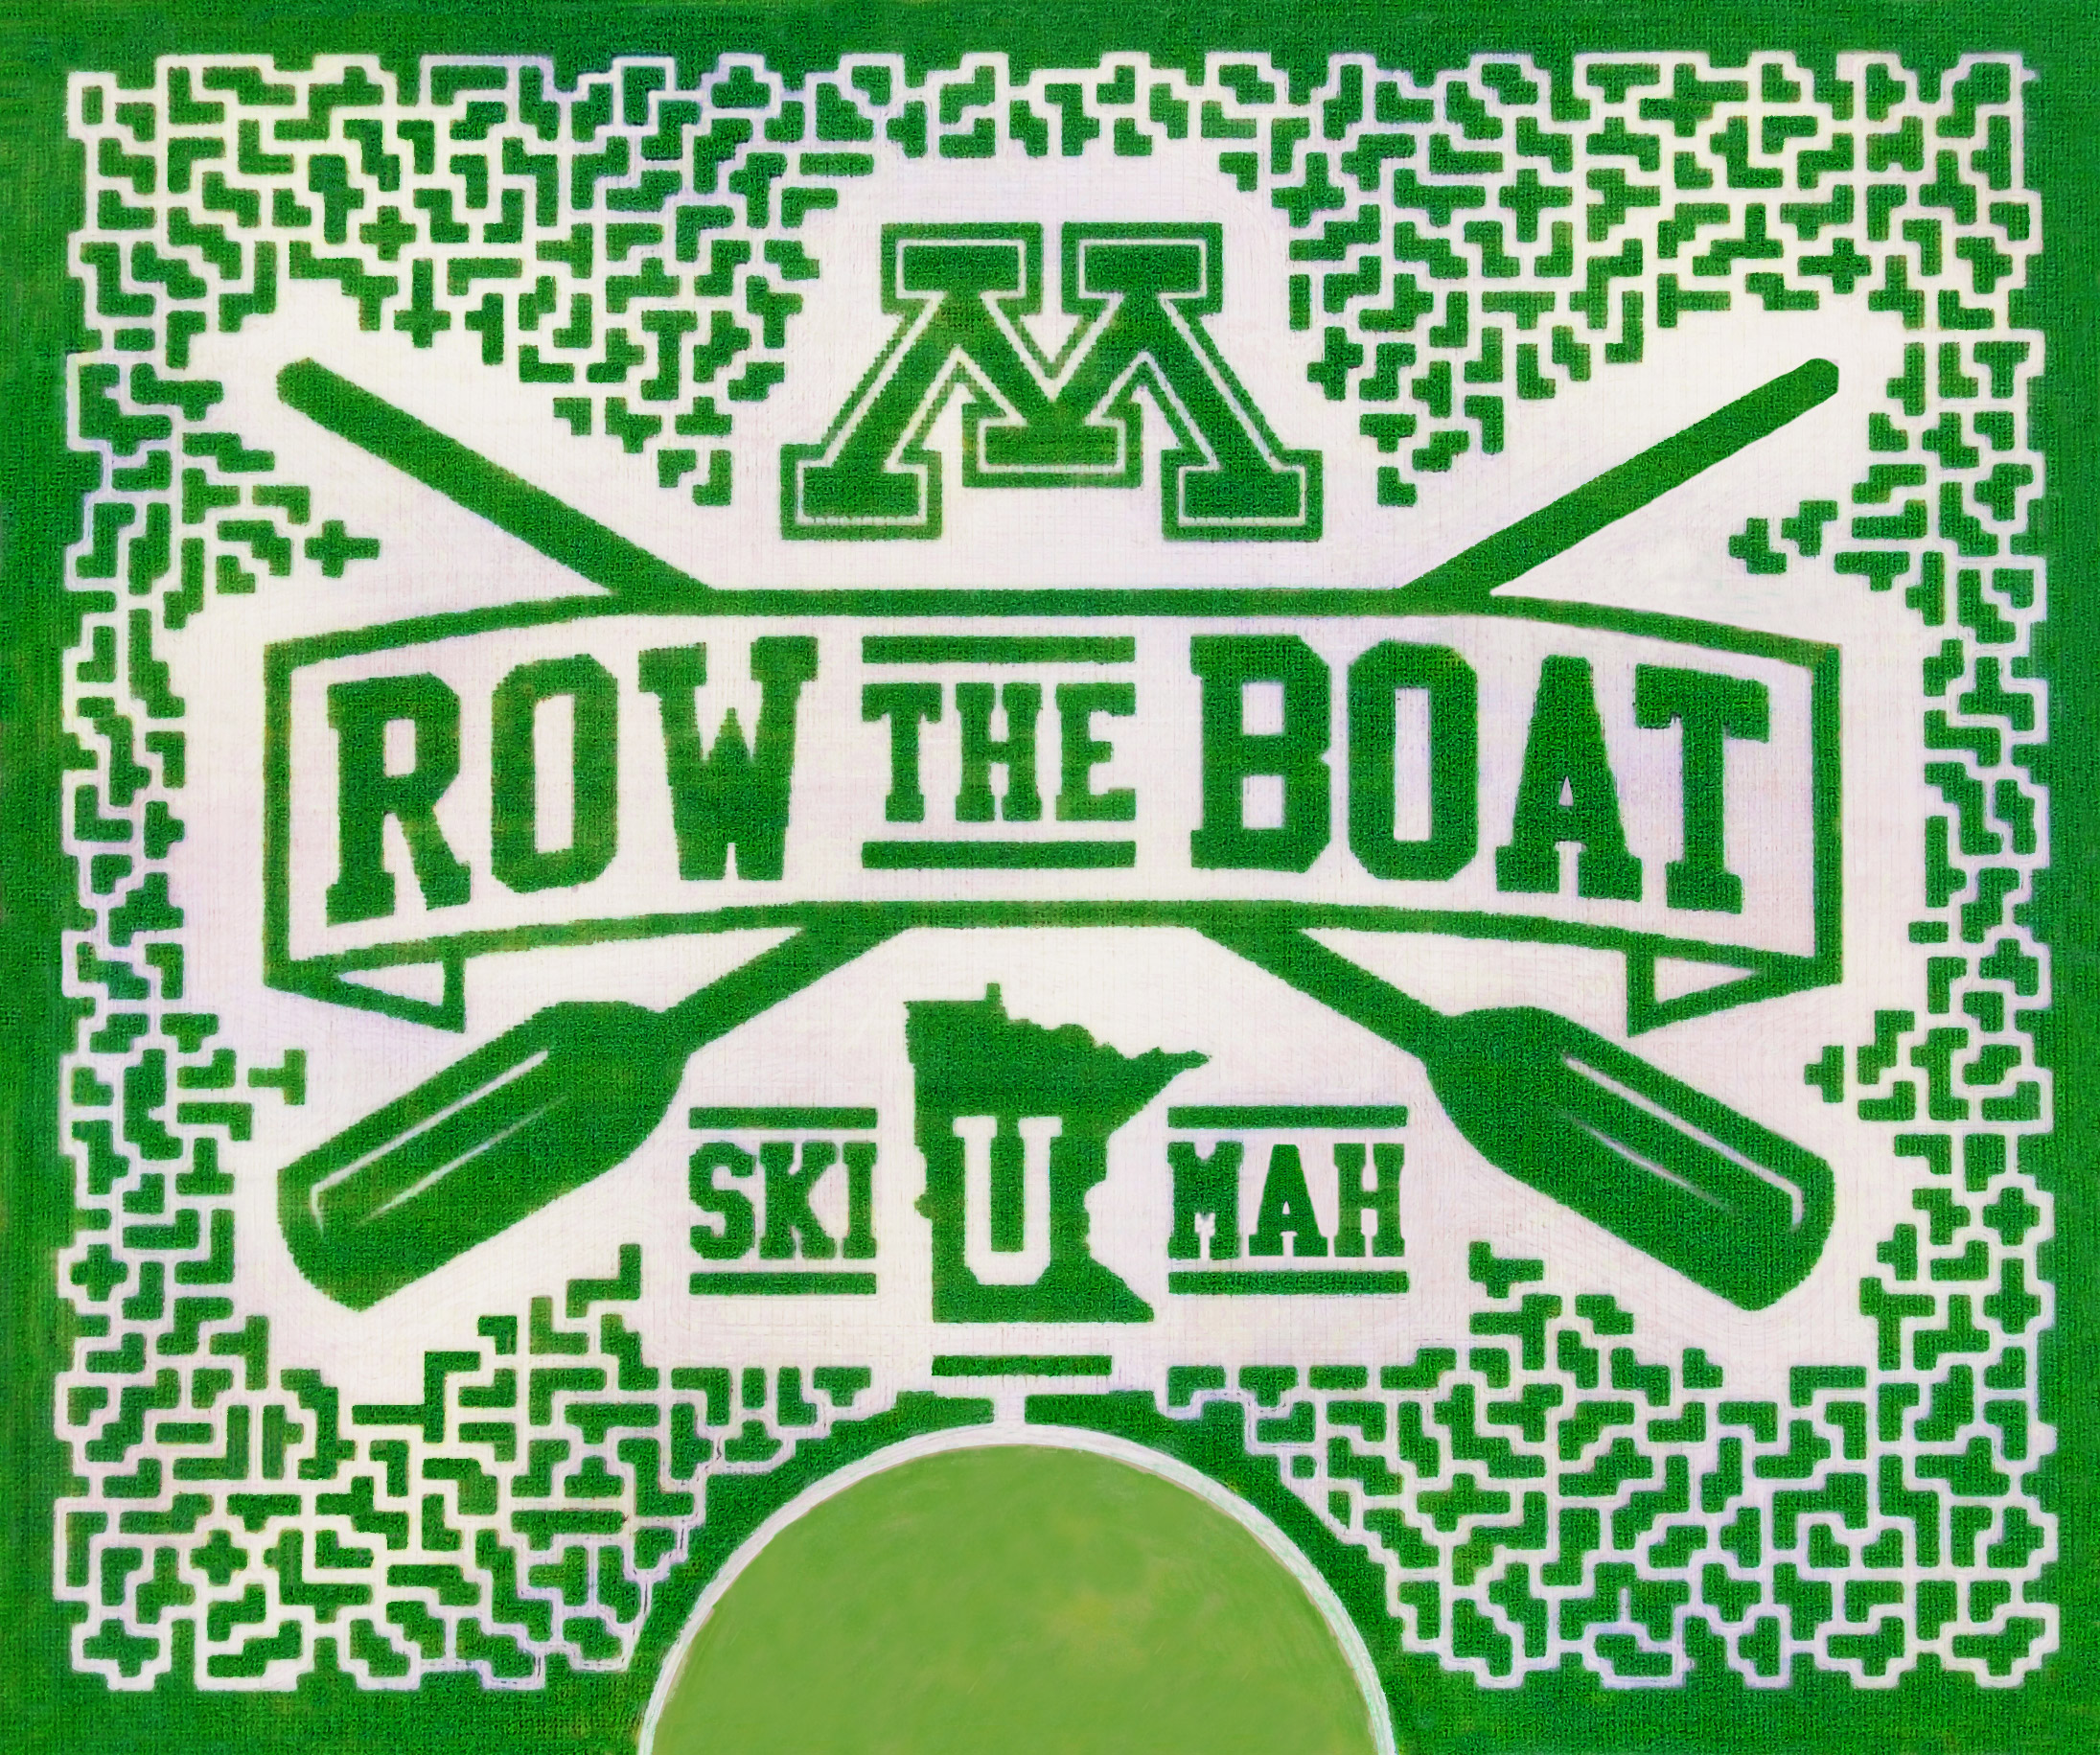 UofM_Row_Boat_medium